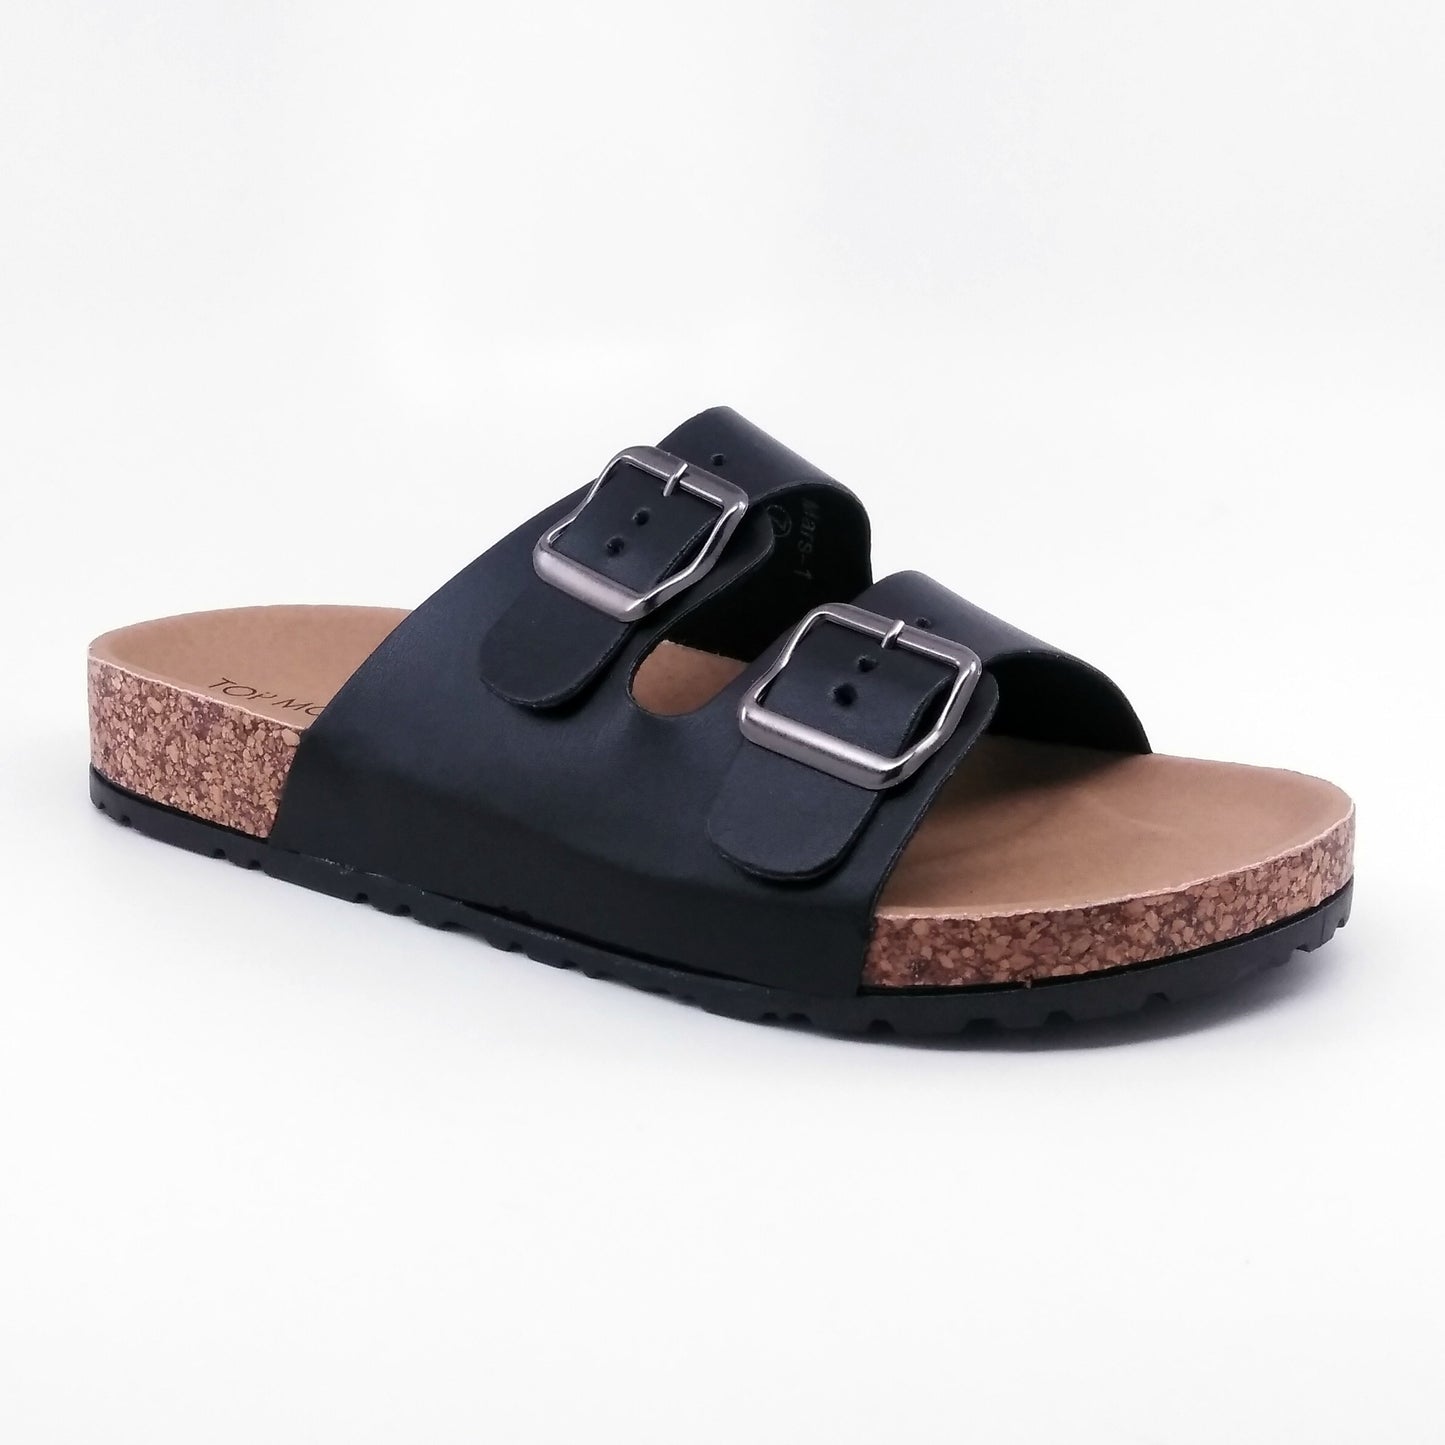 Marisol Woman Slide Sandals (Black)